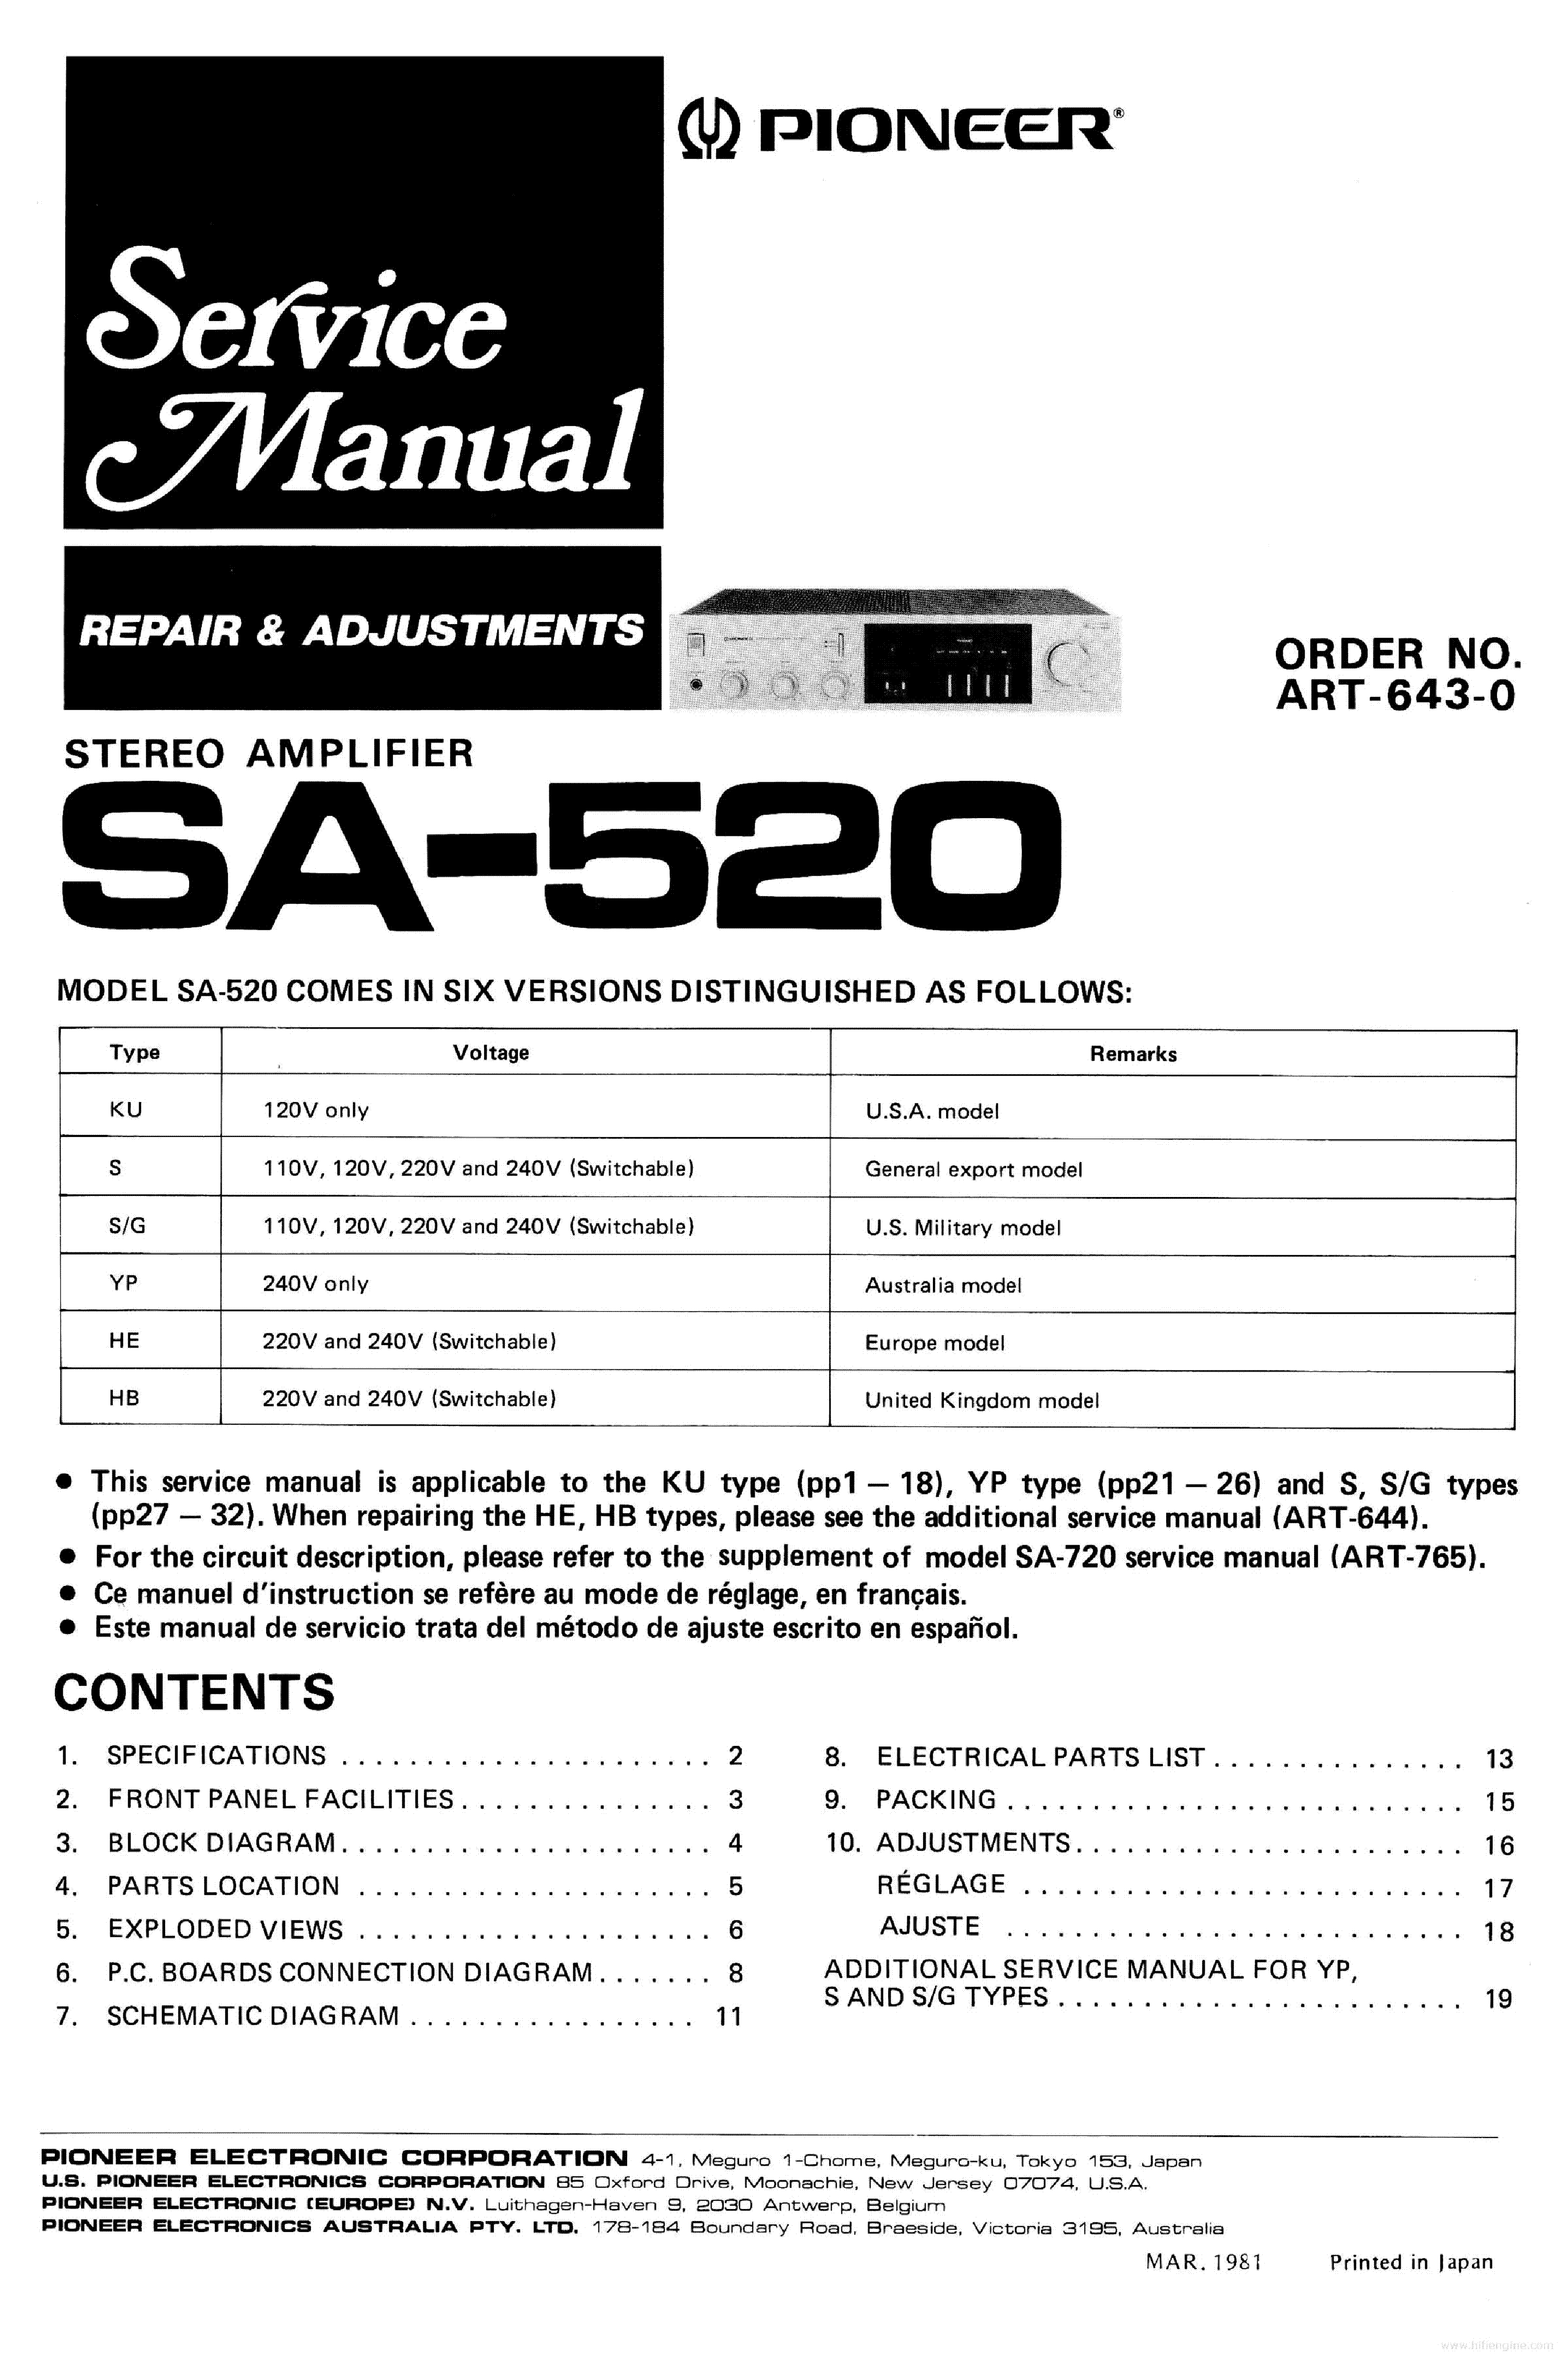 PIONEER SA-520 SA-205 CHASSIS GWK 170 GWK 171 ART-643-0 EN SM service manual (1st page)